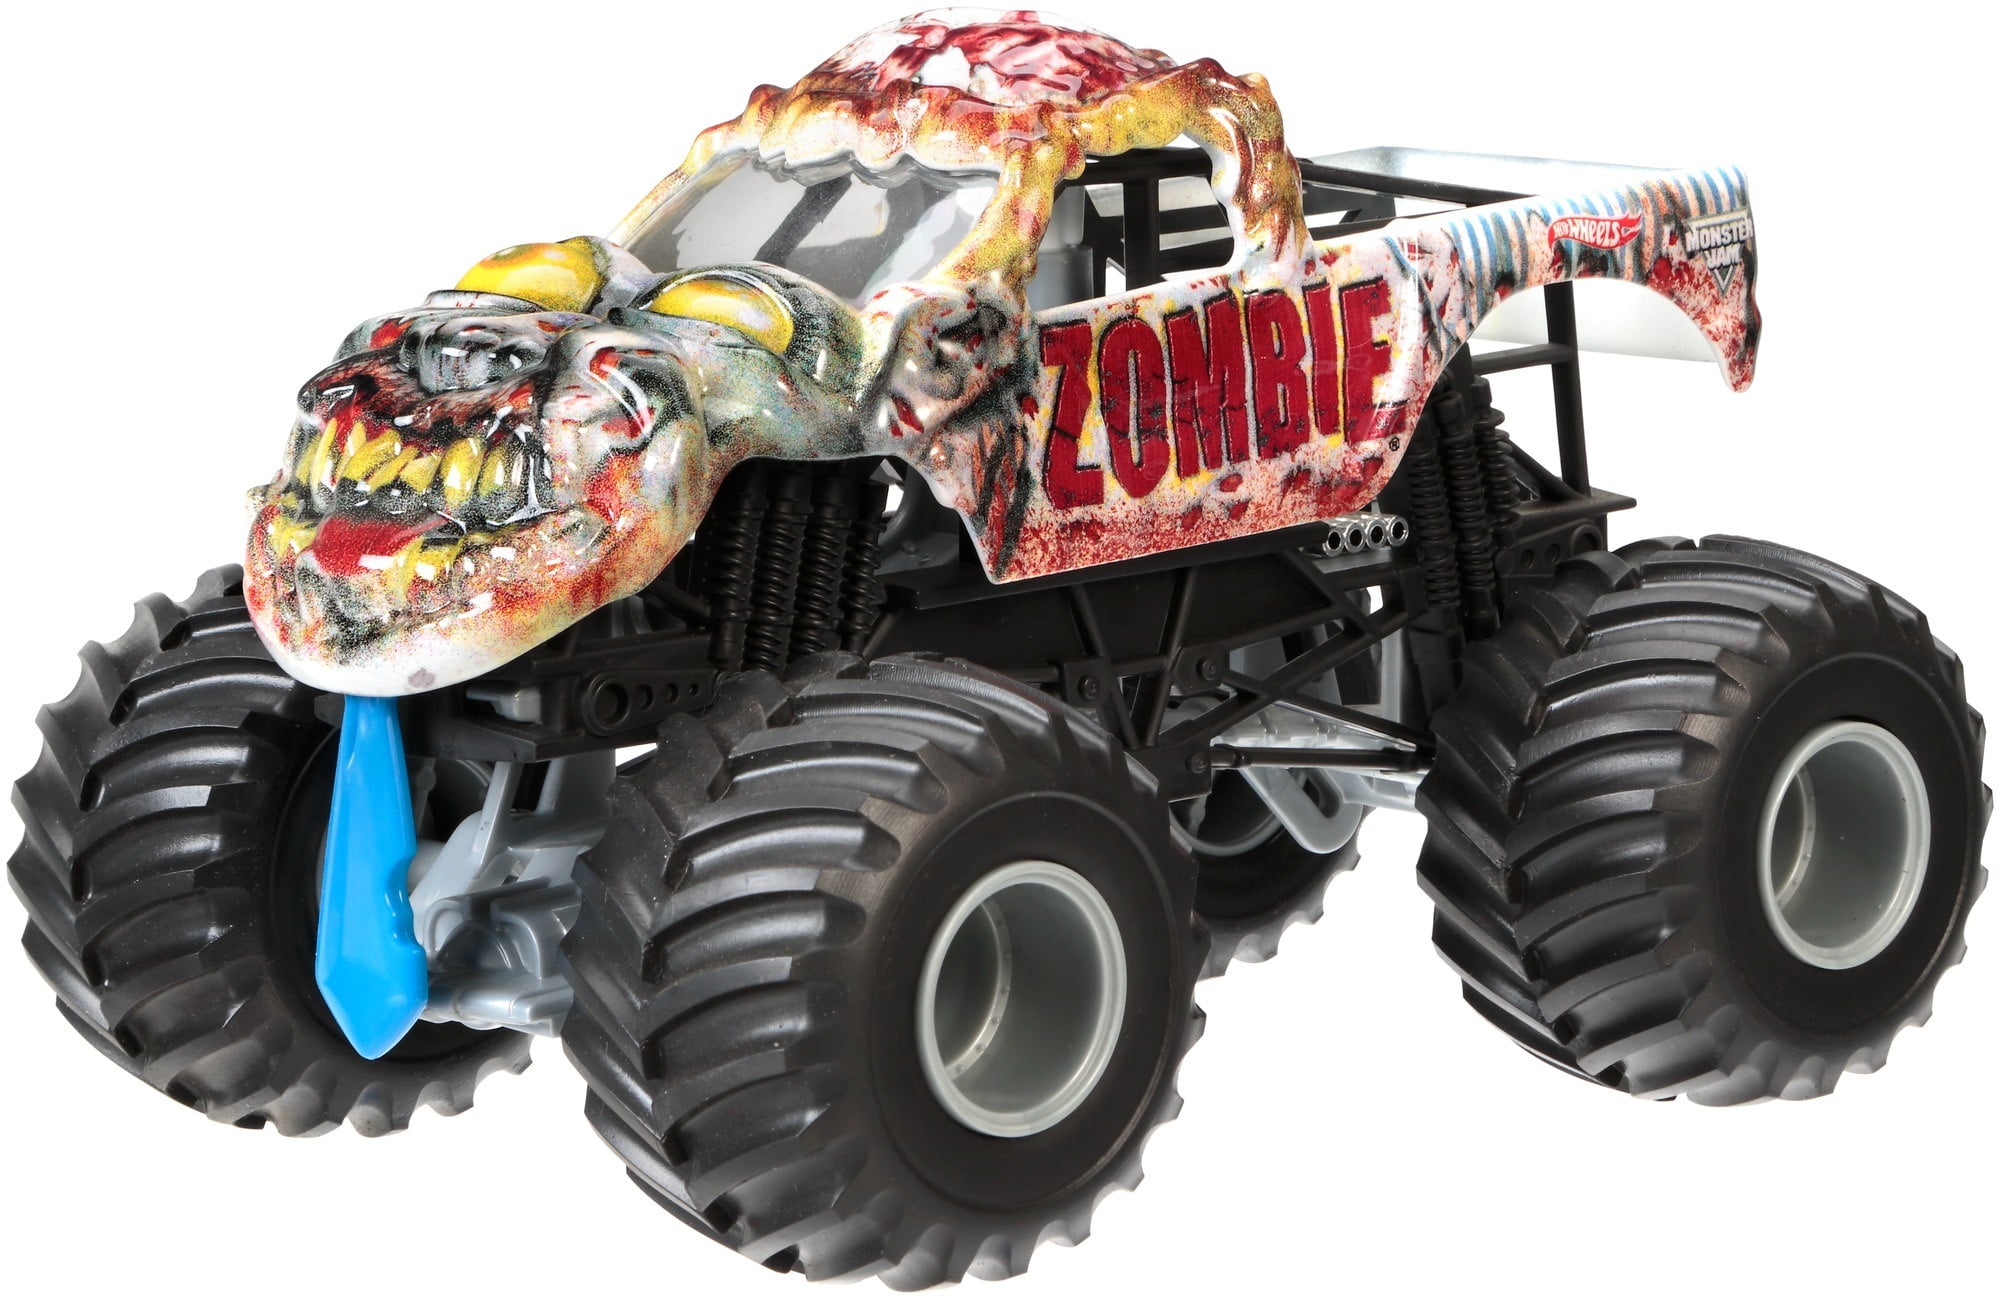 Hot Wheels Monster Jam Zombie 2013 Mattel Vehicle No BGH24 NRFB